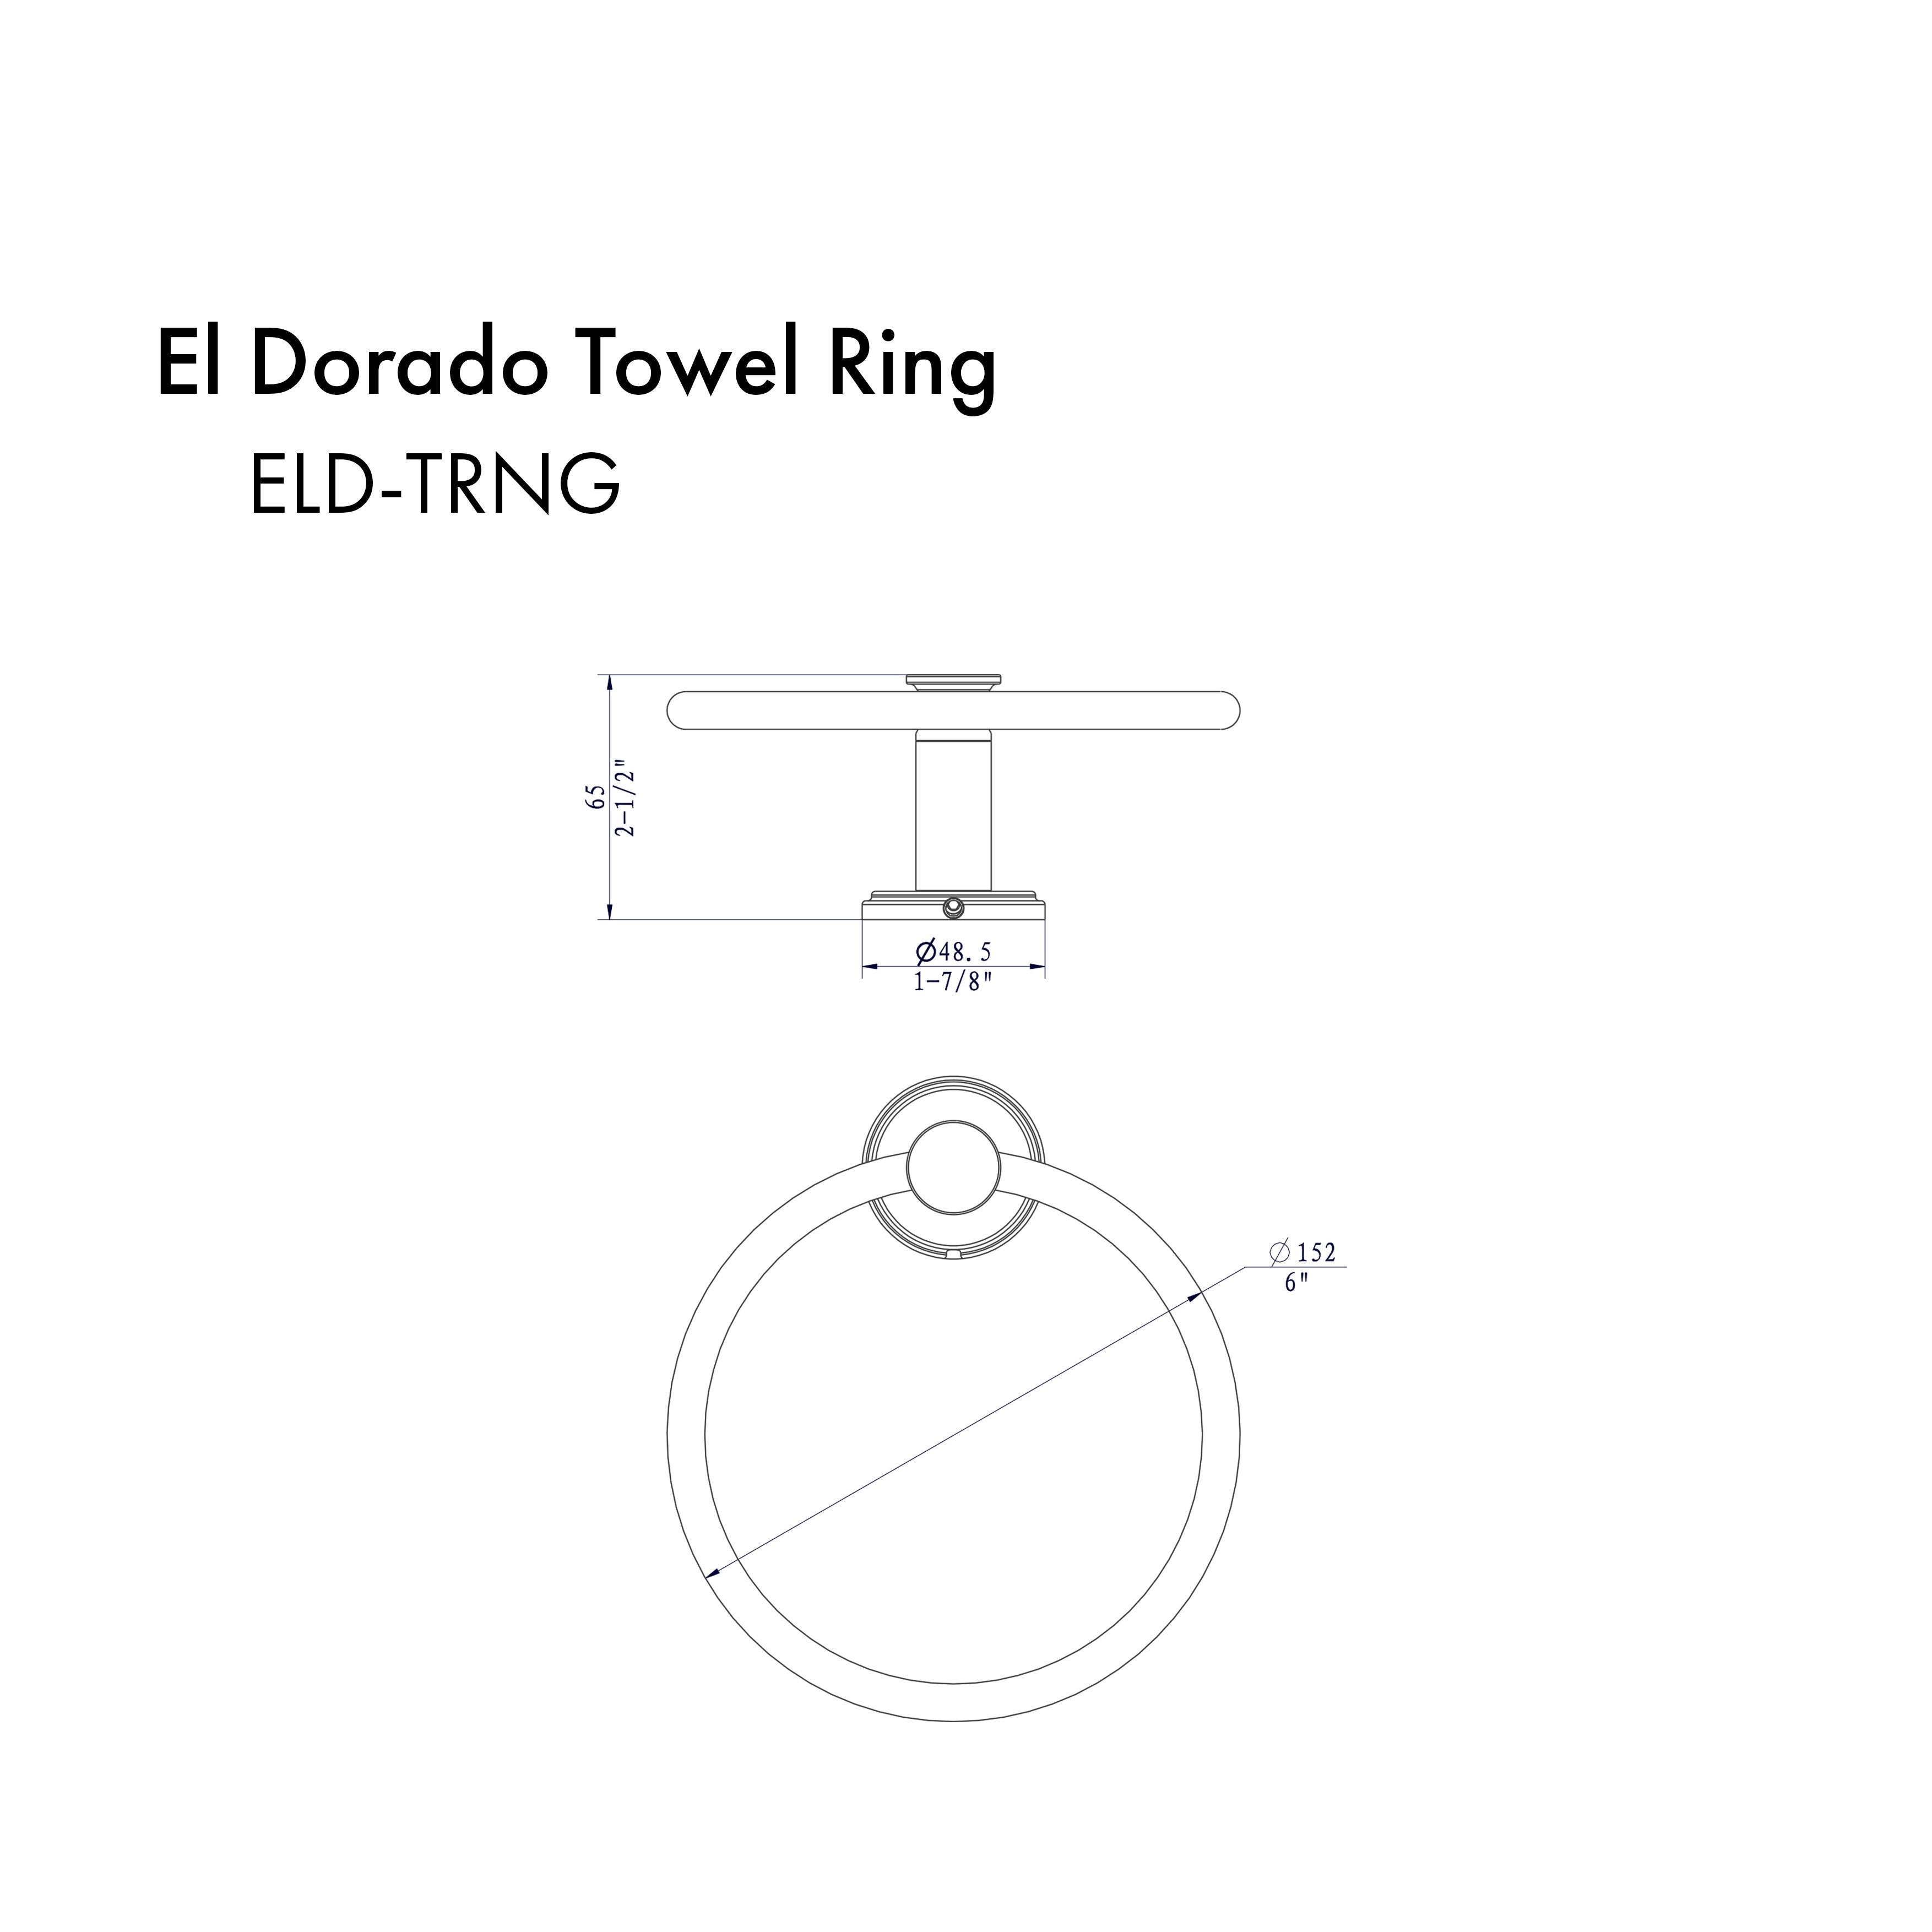 Therangehoodstore.com, ZLINE El Dorado Towel Ring with color options (ELD-TRNG), ELD-TRNG-BN,